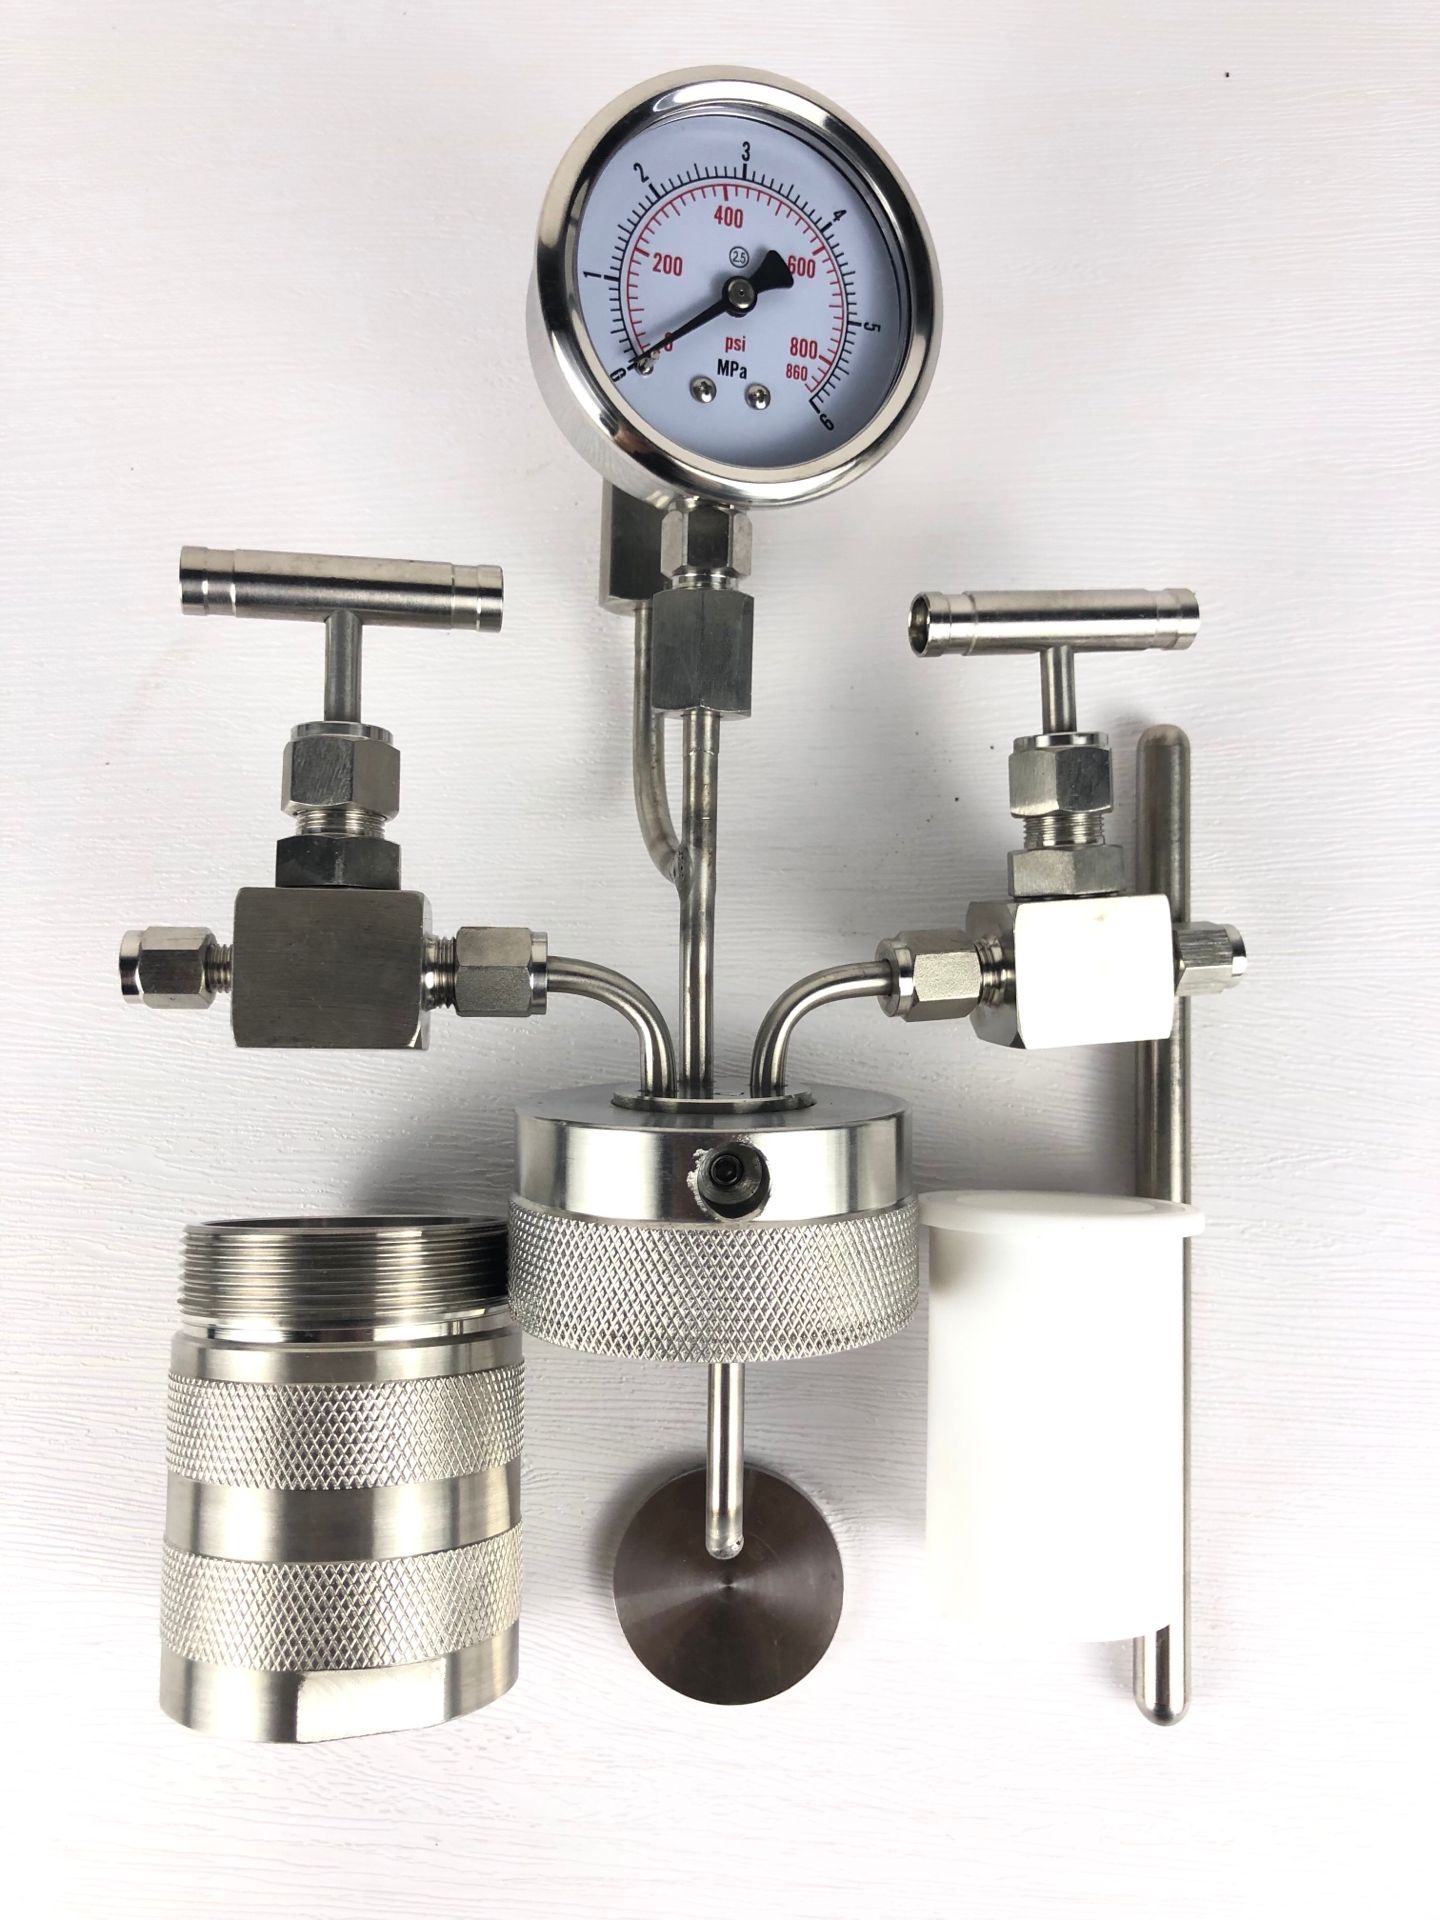 laboratory pressure reactor